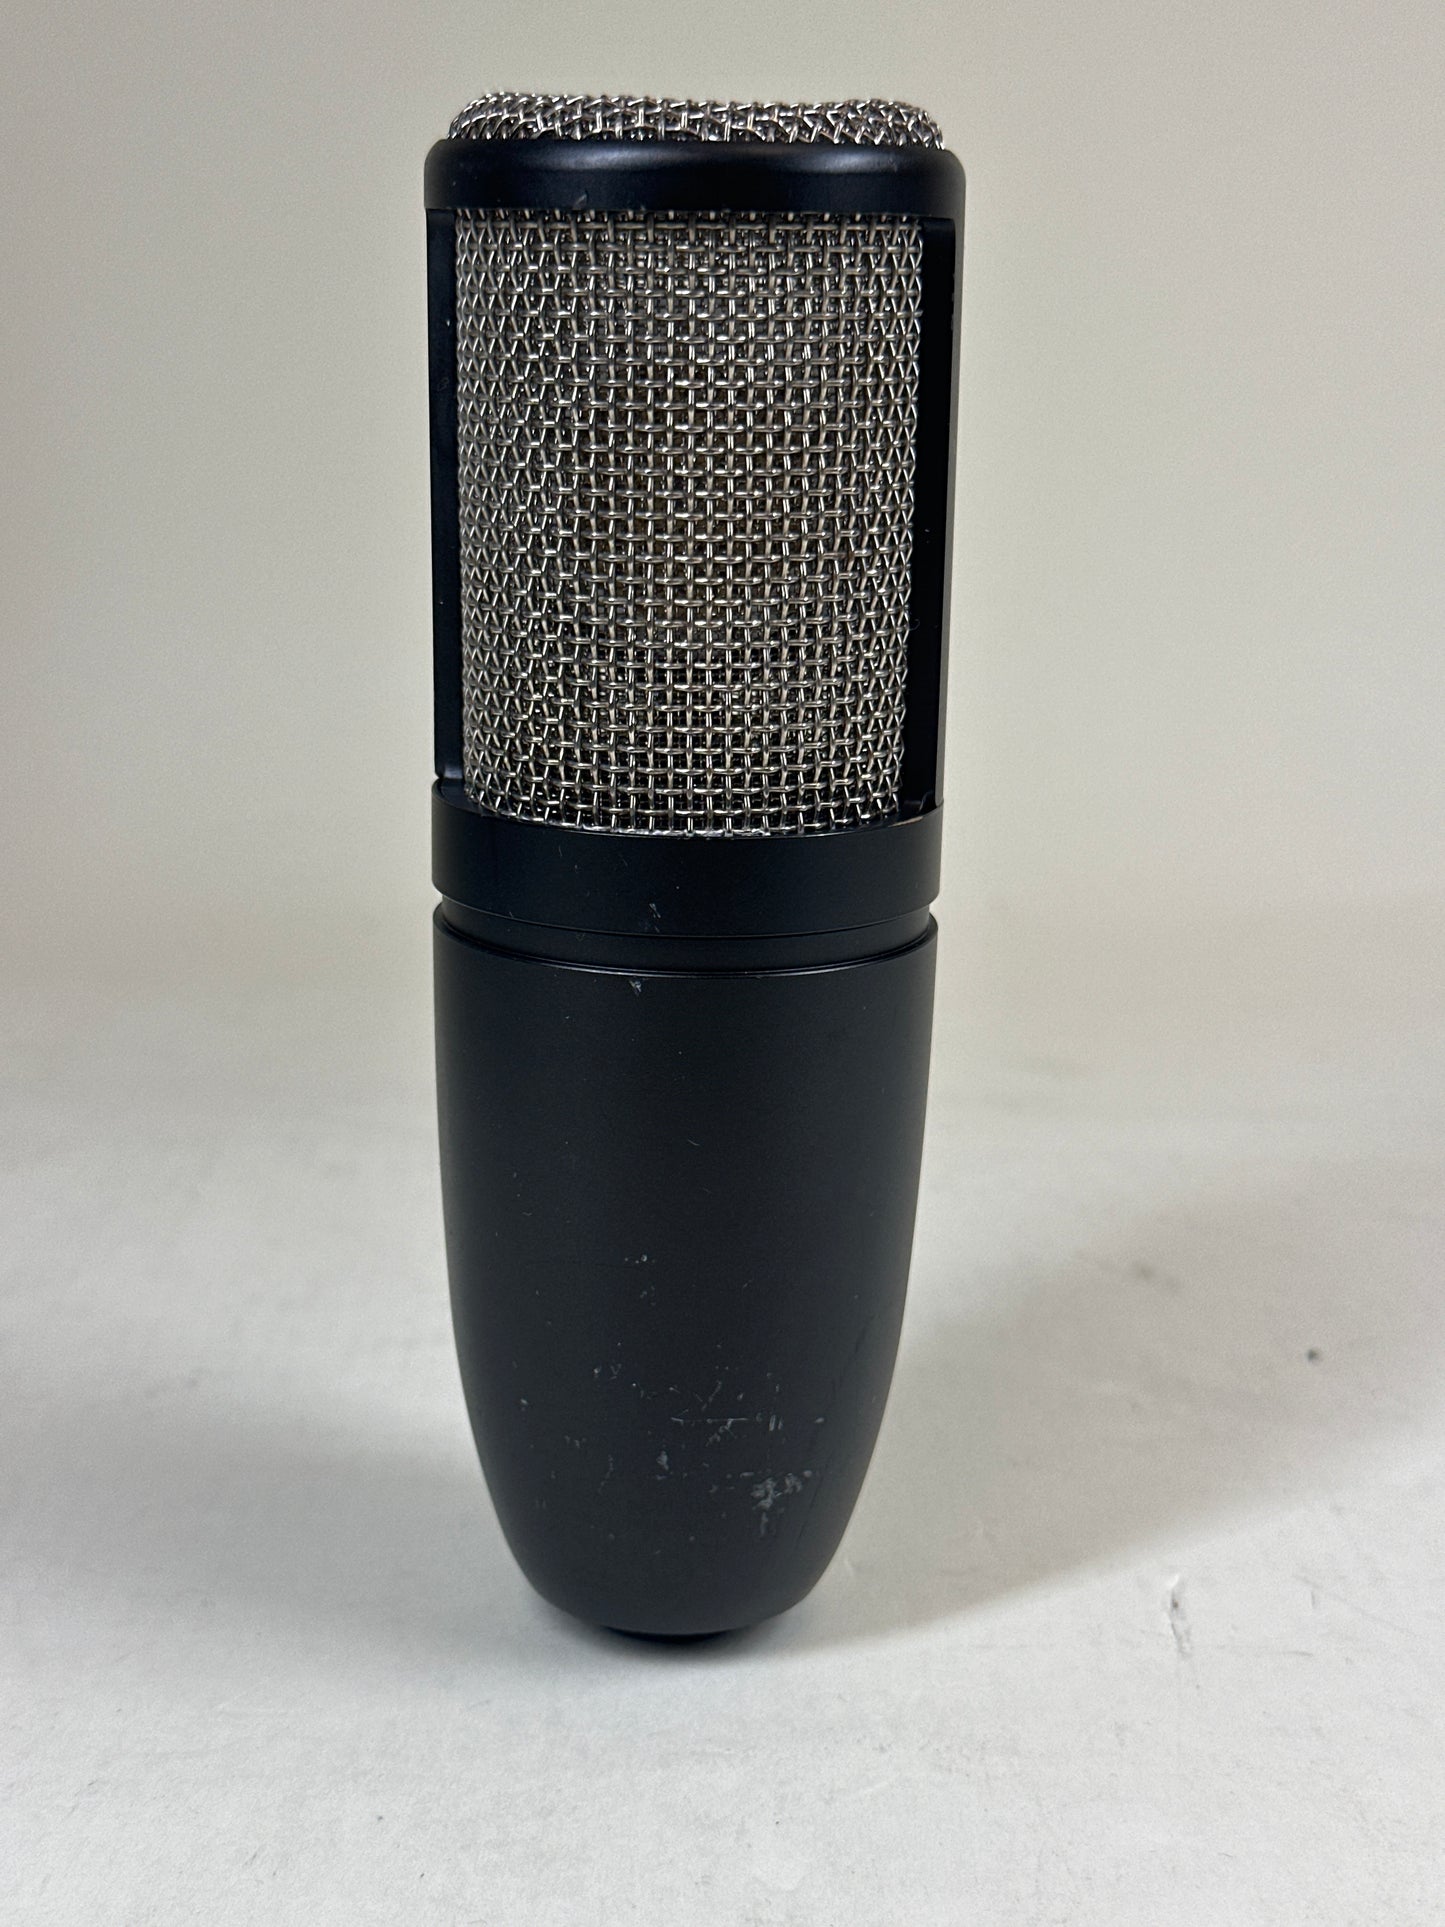 AKG P220 large-Diaphragm True Condenser Microphone